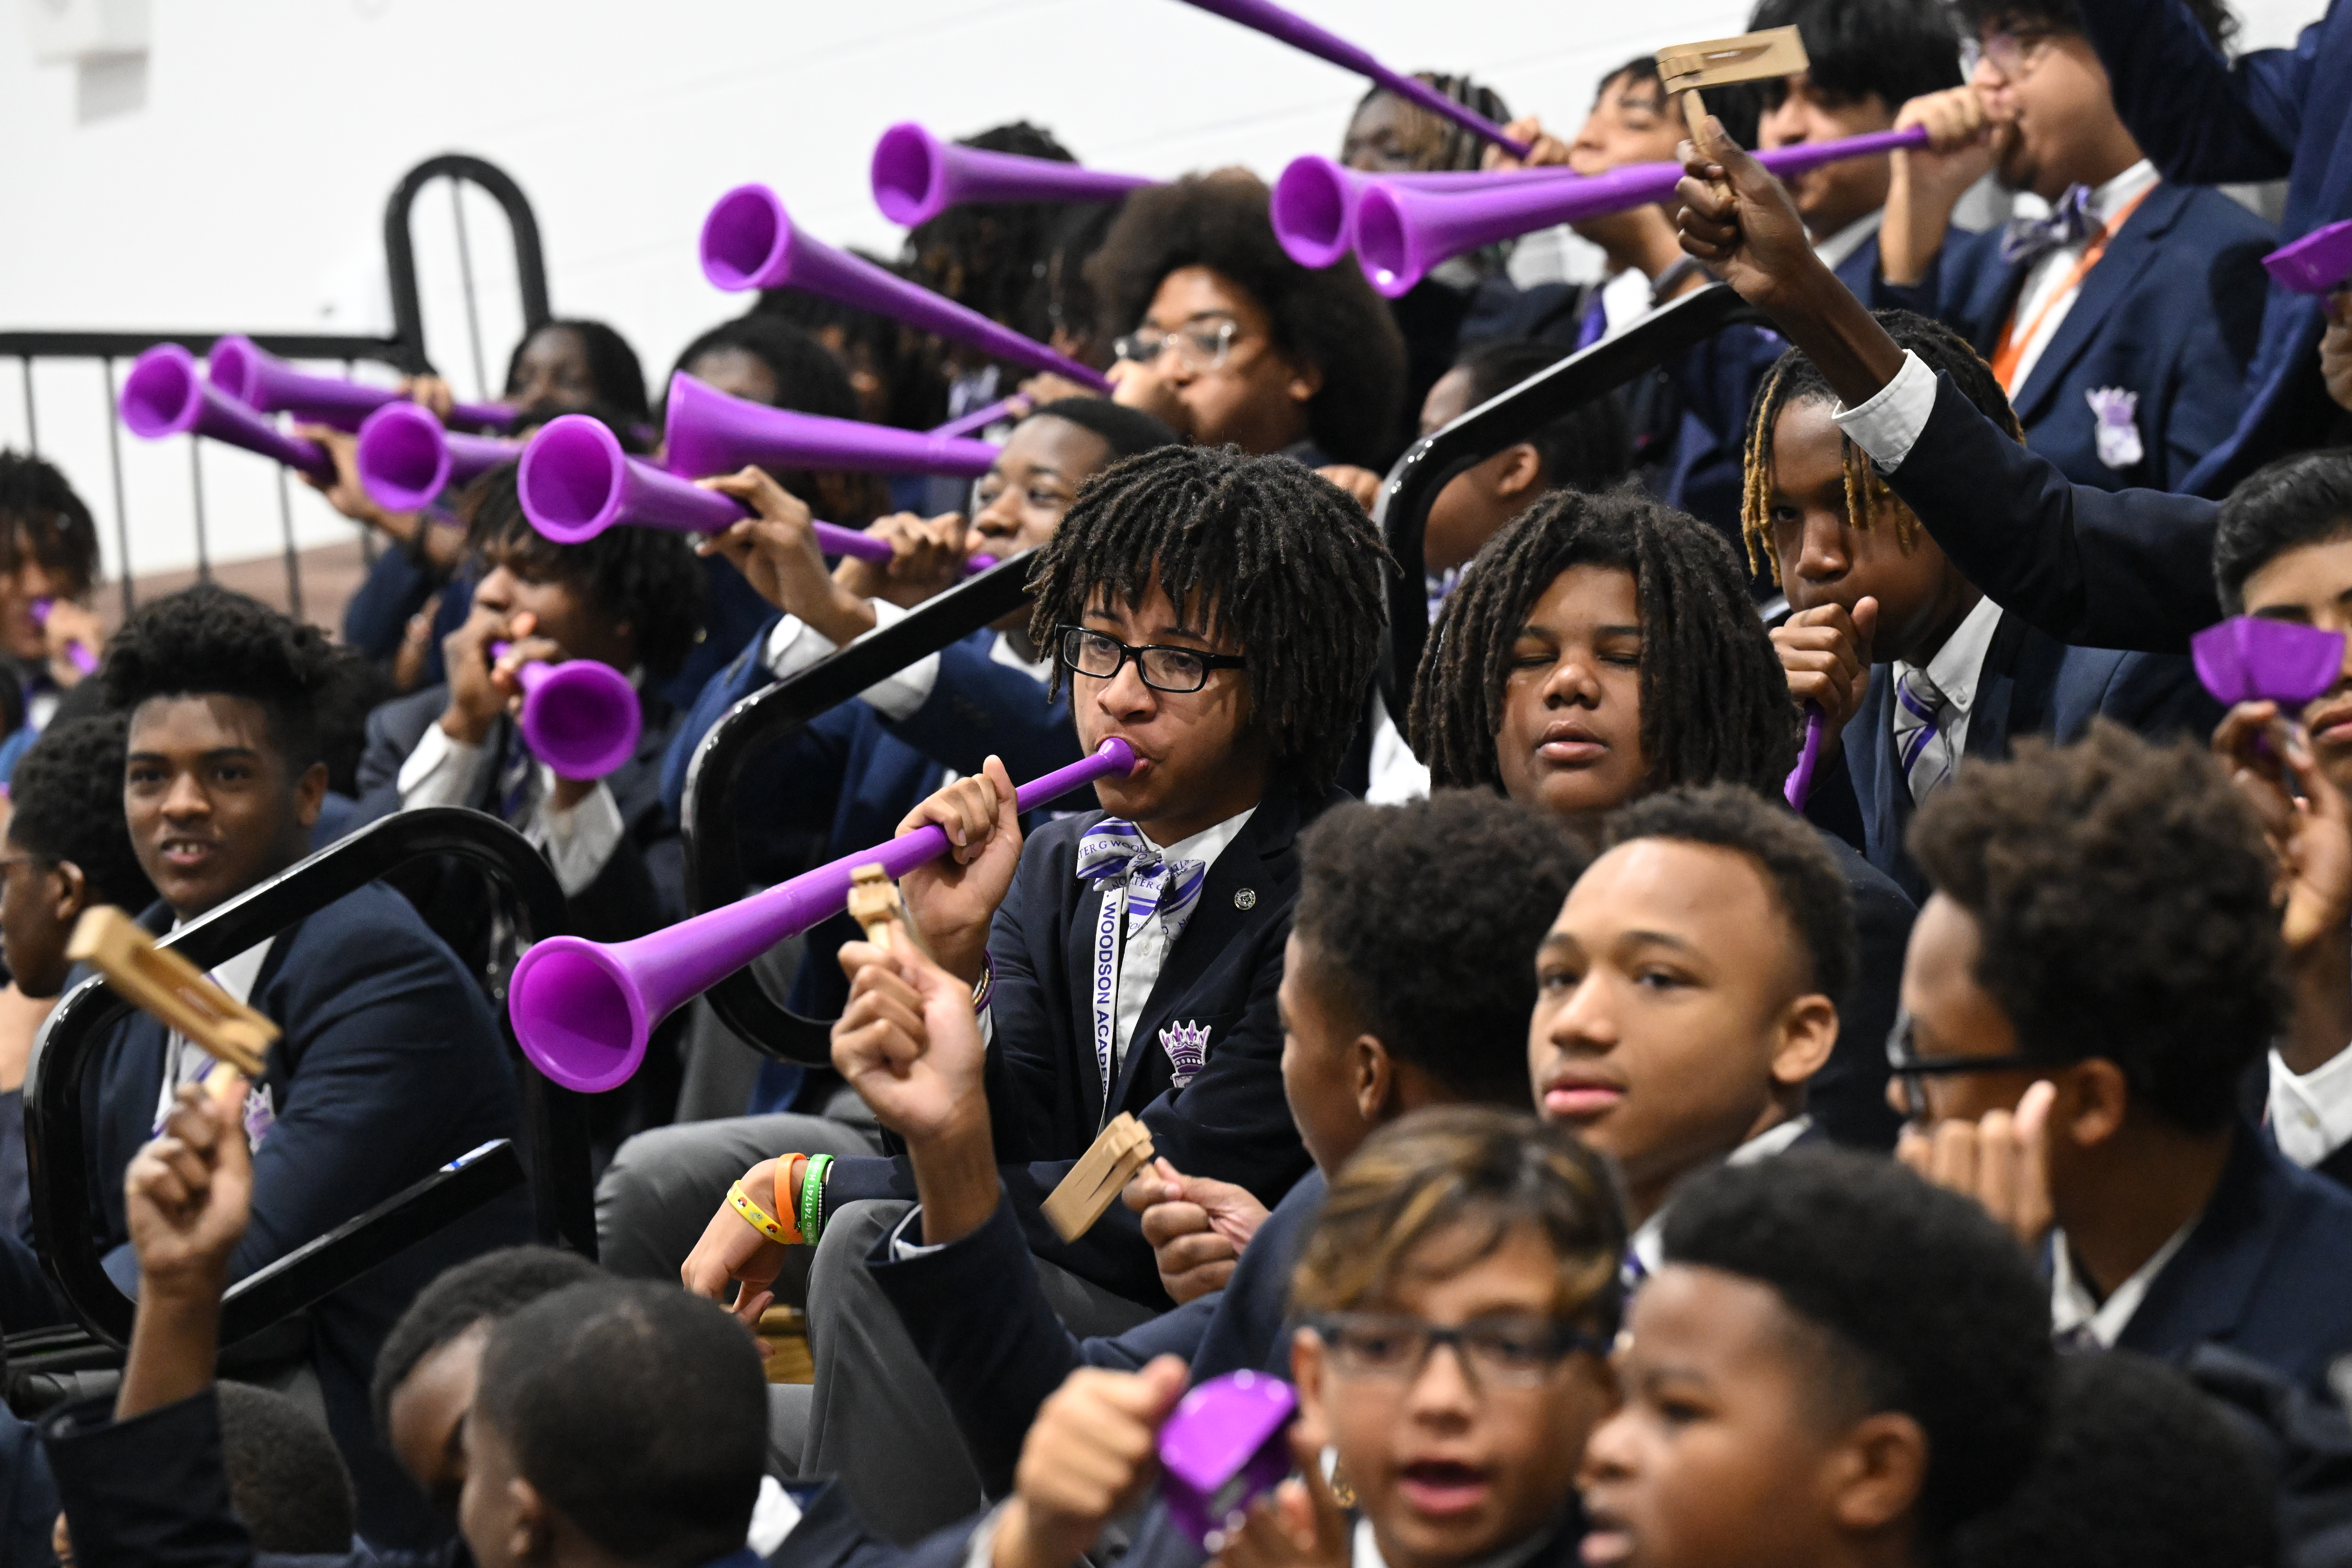 Carter G. Woodson Academy Scholars blow celebratory stadium horns in the school's signature purple to celebrate their teacher Jacob Ball.